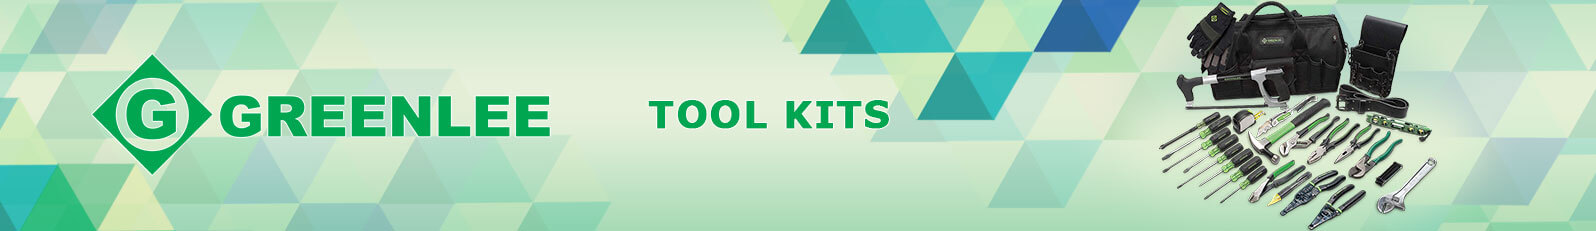 Greenlee Tool Kits